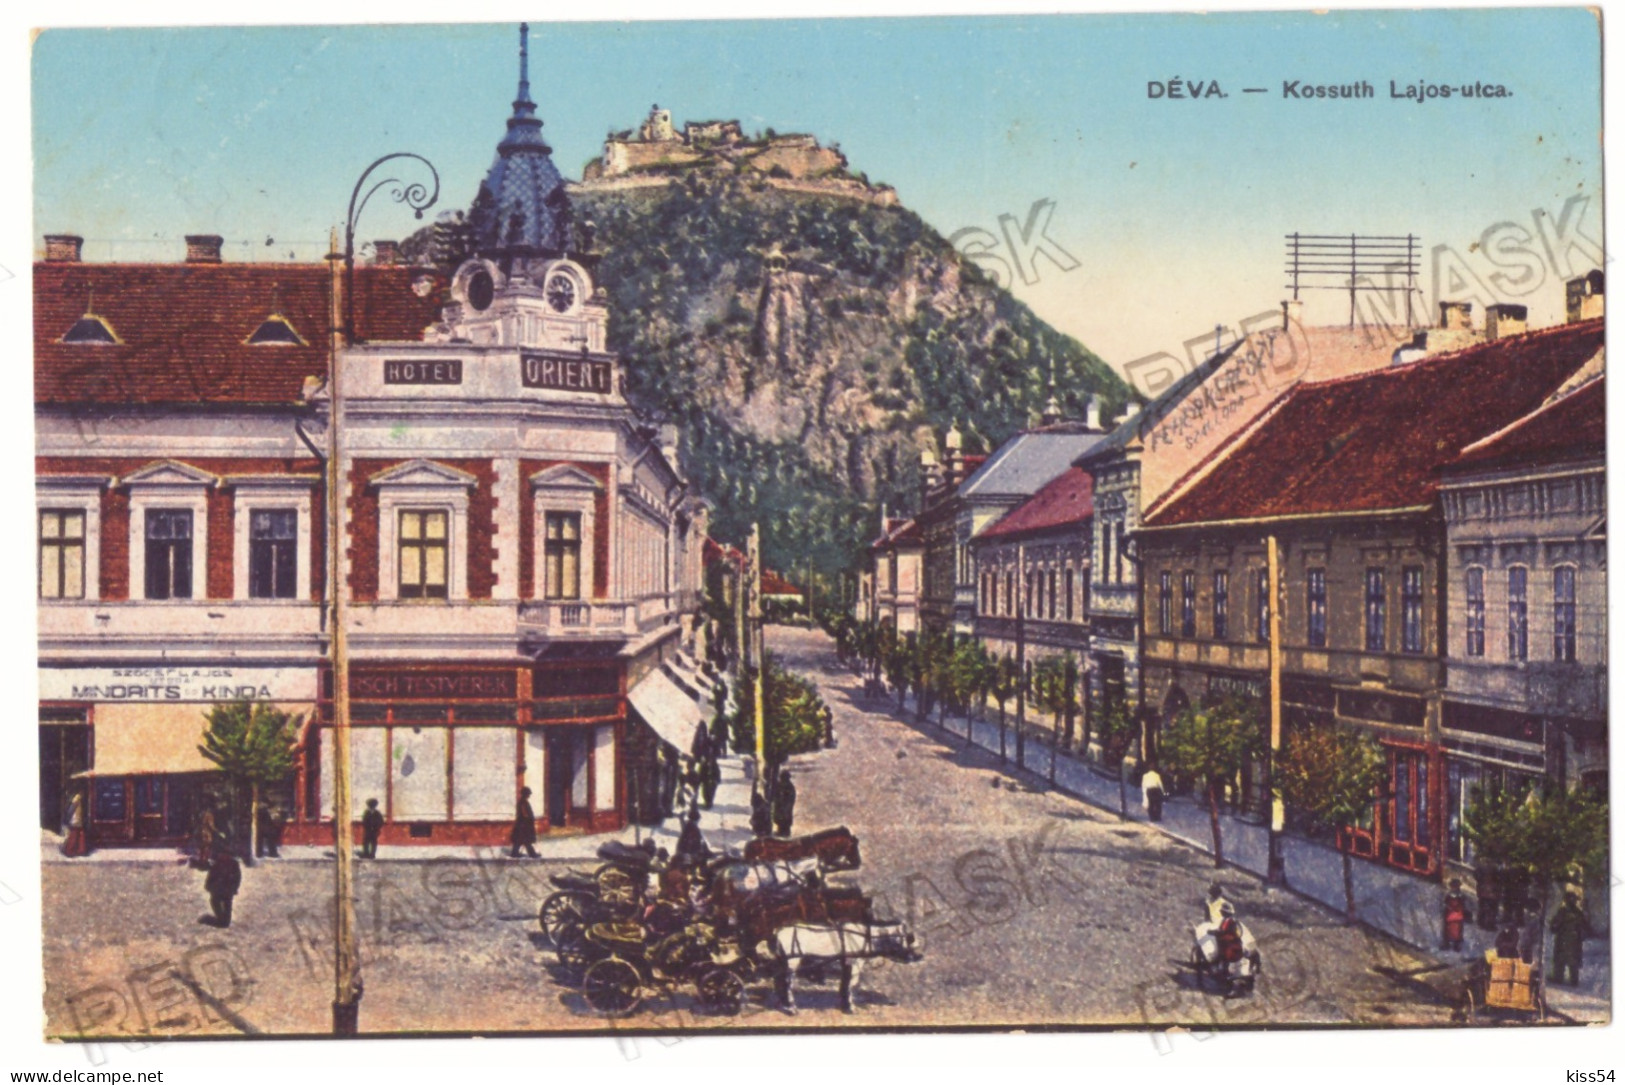 RO 82 - 22456 DEVA, Hunedoara, Market, Romania - Old Postcard - Used - 1911 - Roumanie